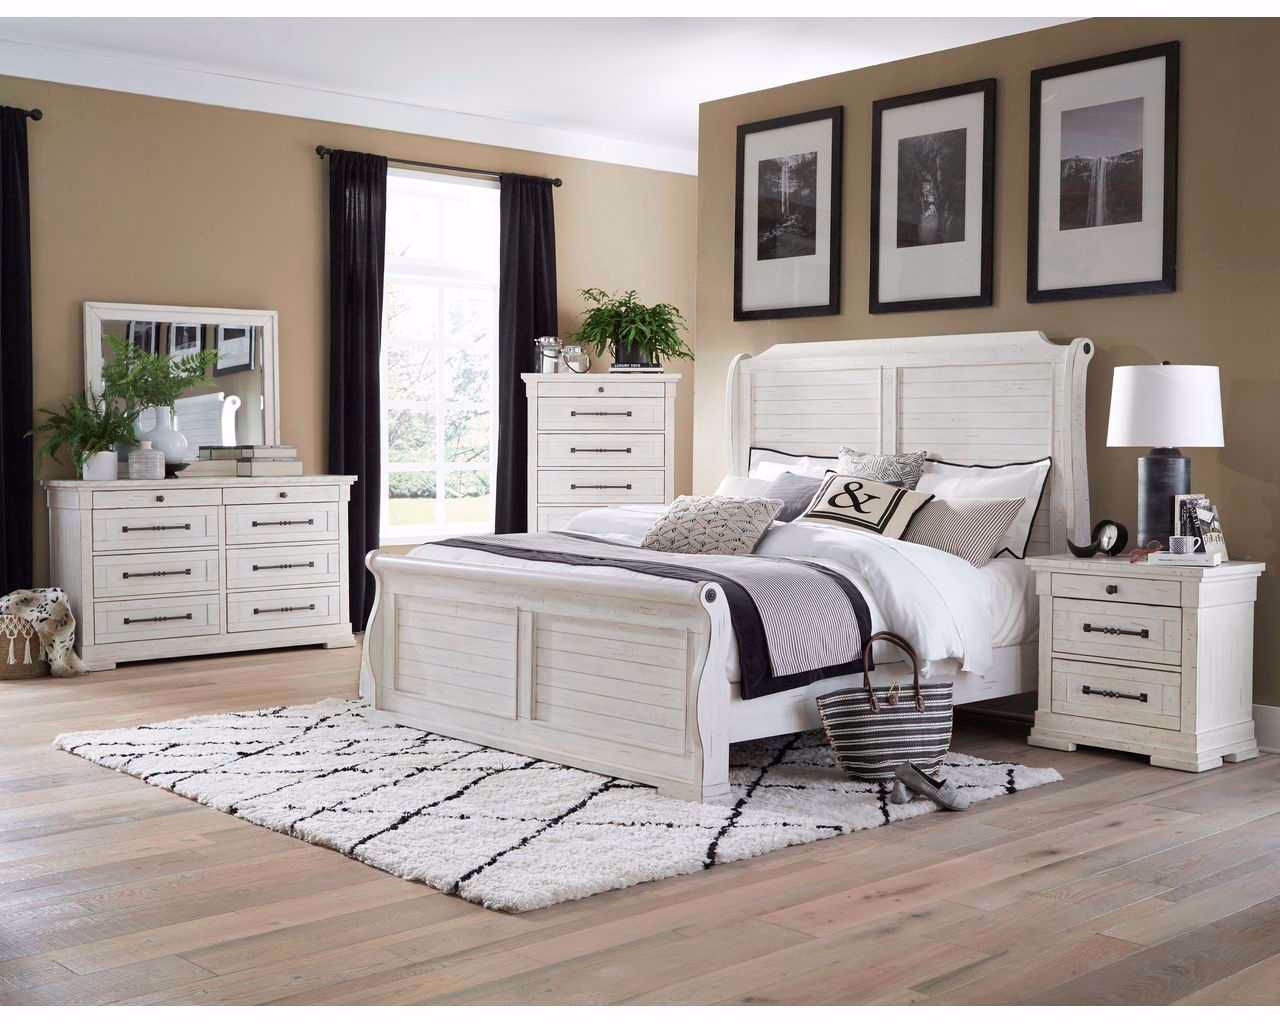 Home Queen Bedroom Set for size 1280 X 1024